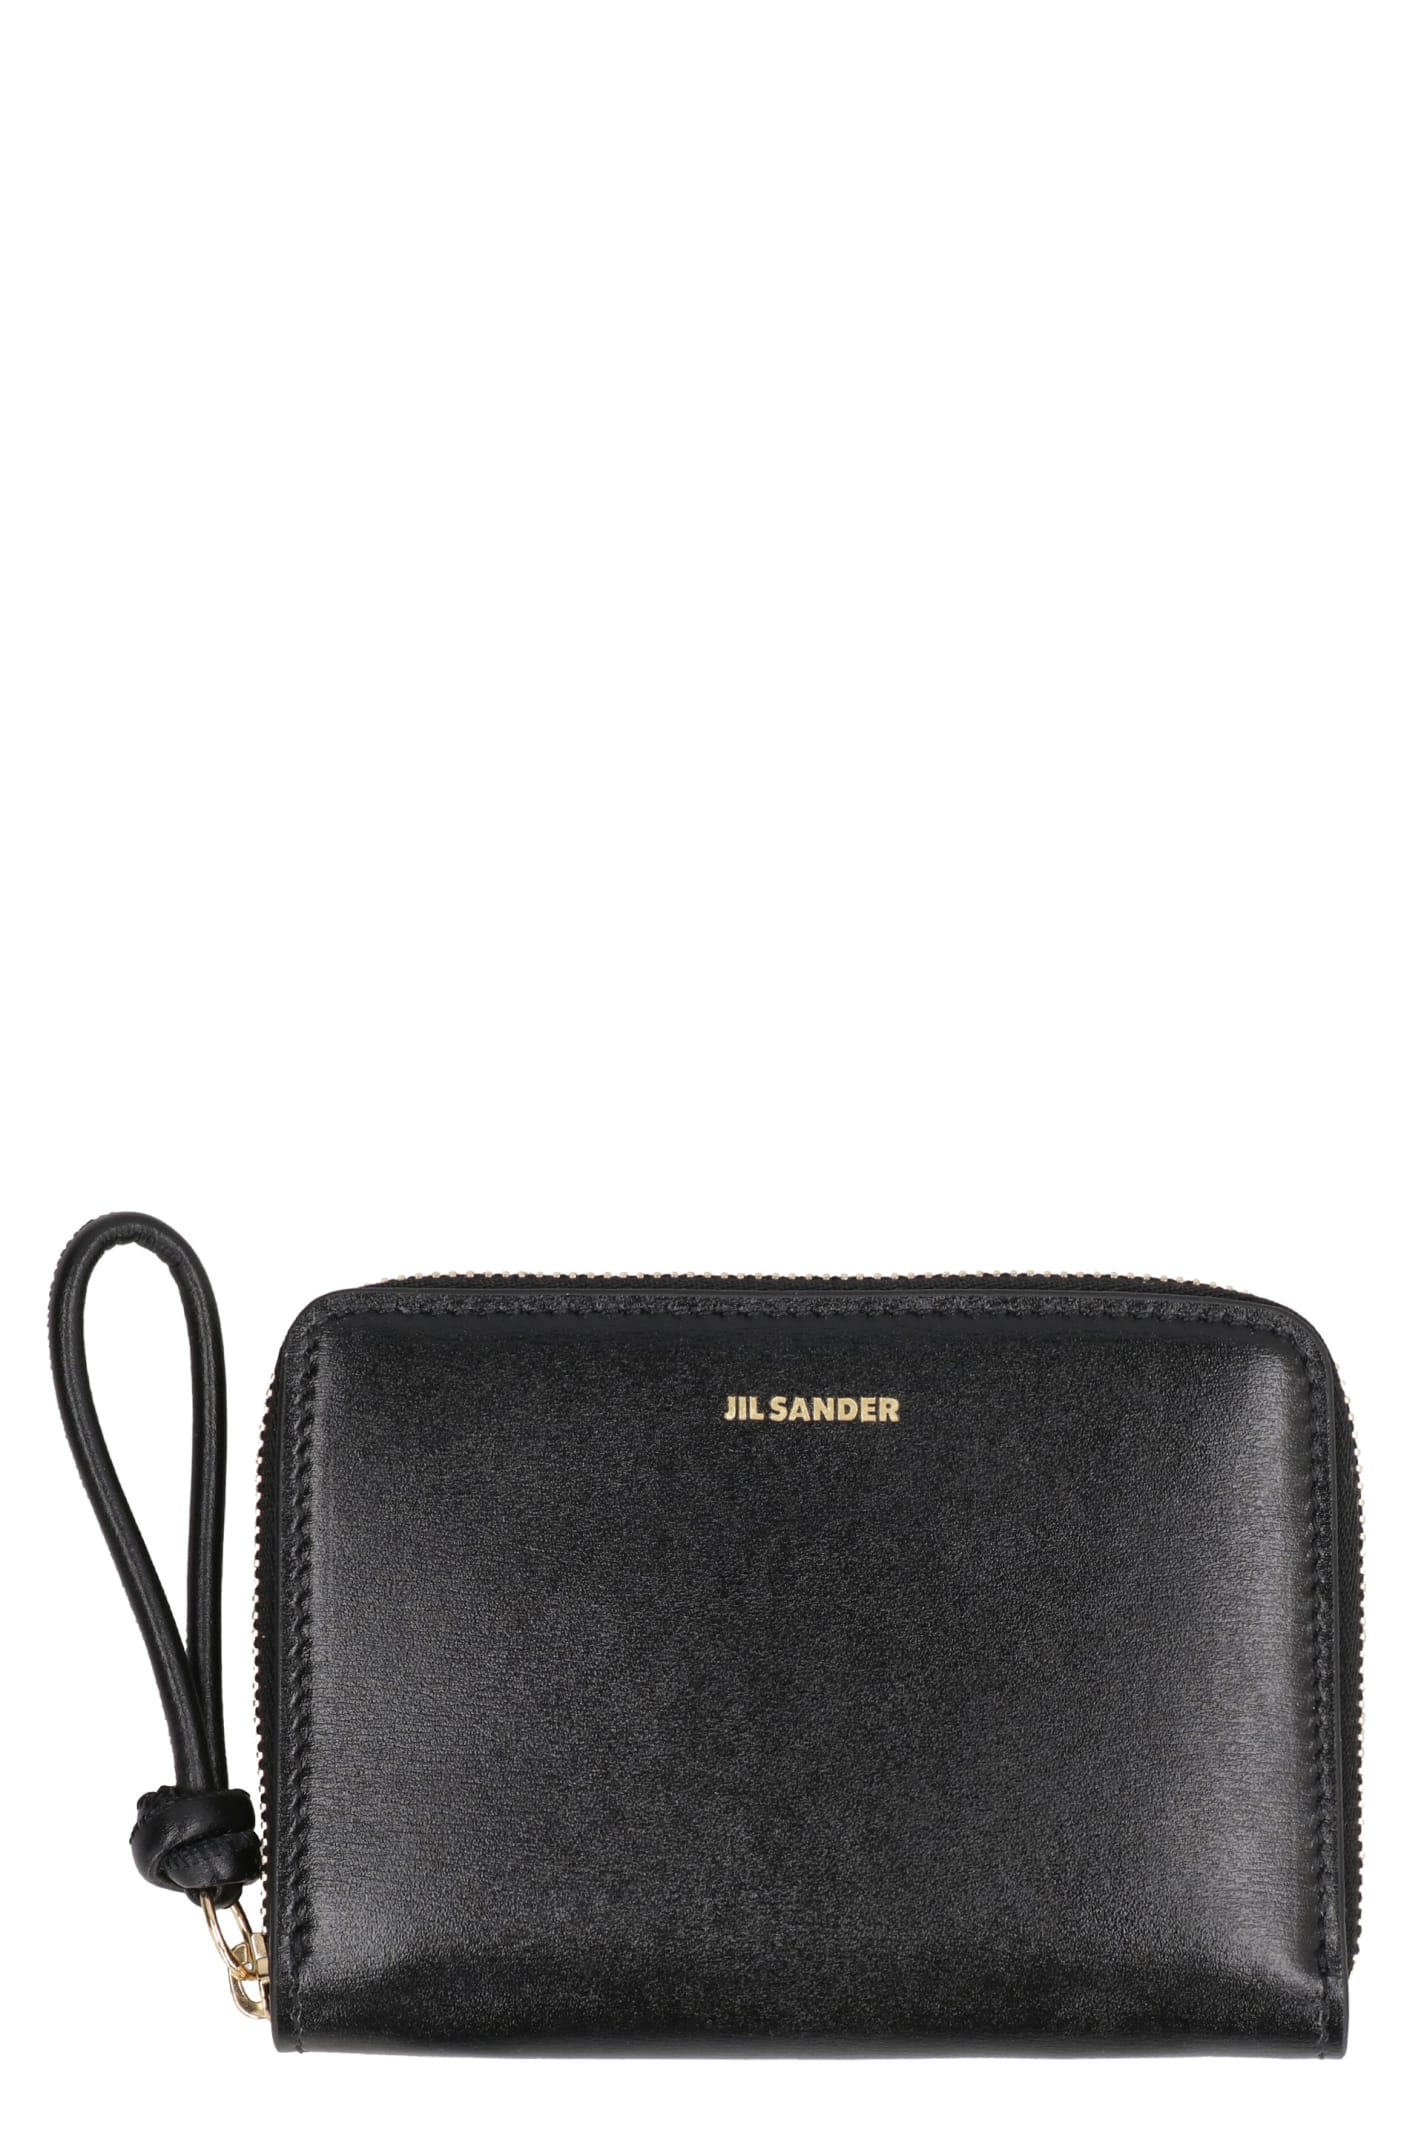 Jil Sander Small Leather Wallet In Black